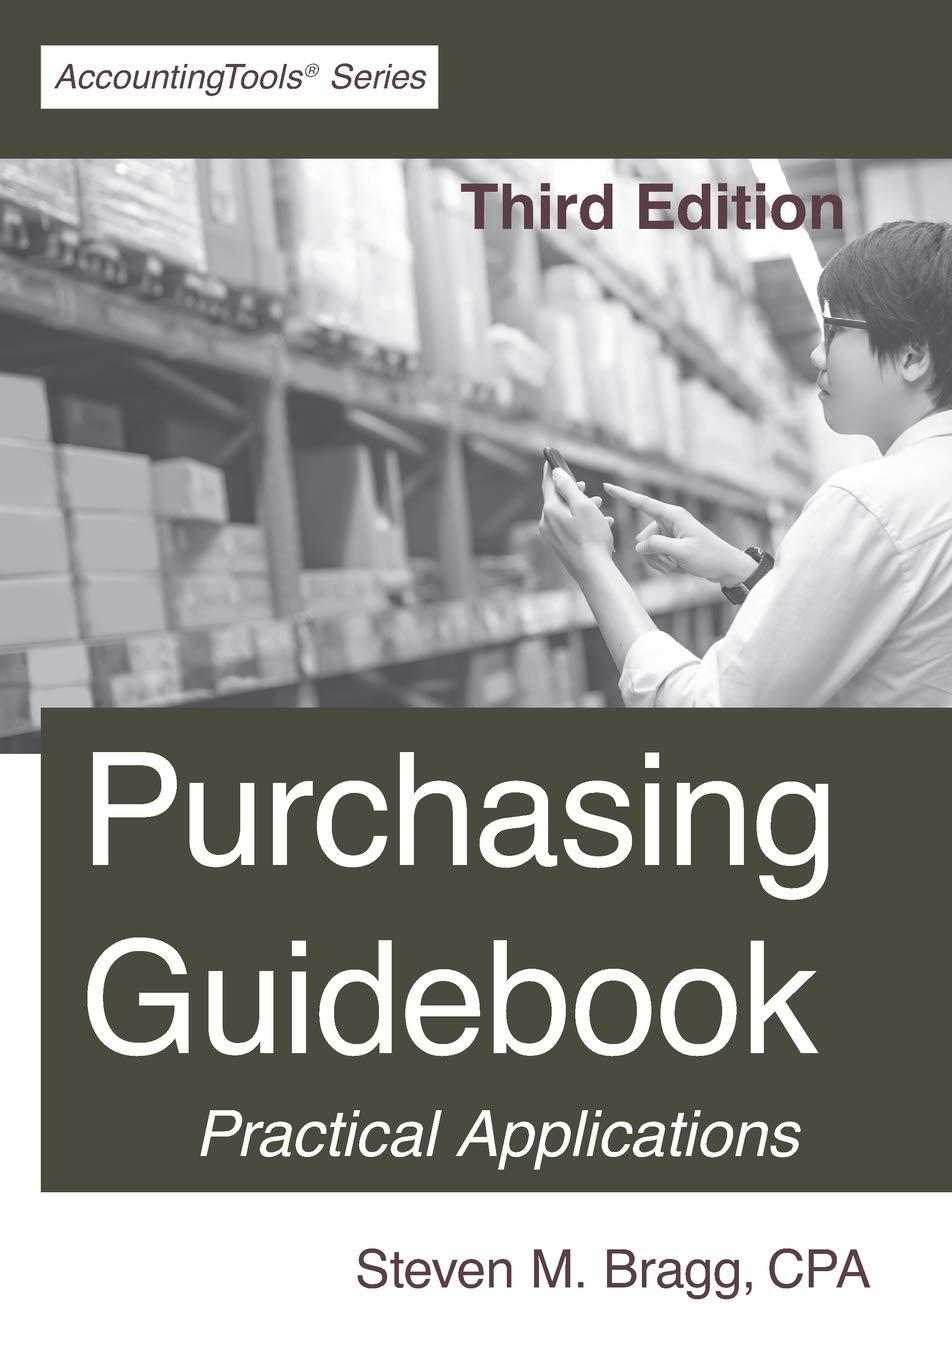 purchasing guidebook 3rd edition steven m. bragg 164221065x, 9781642210651